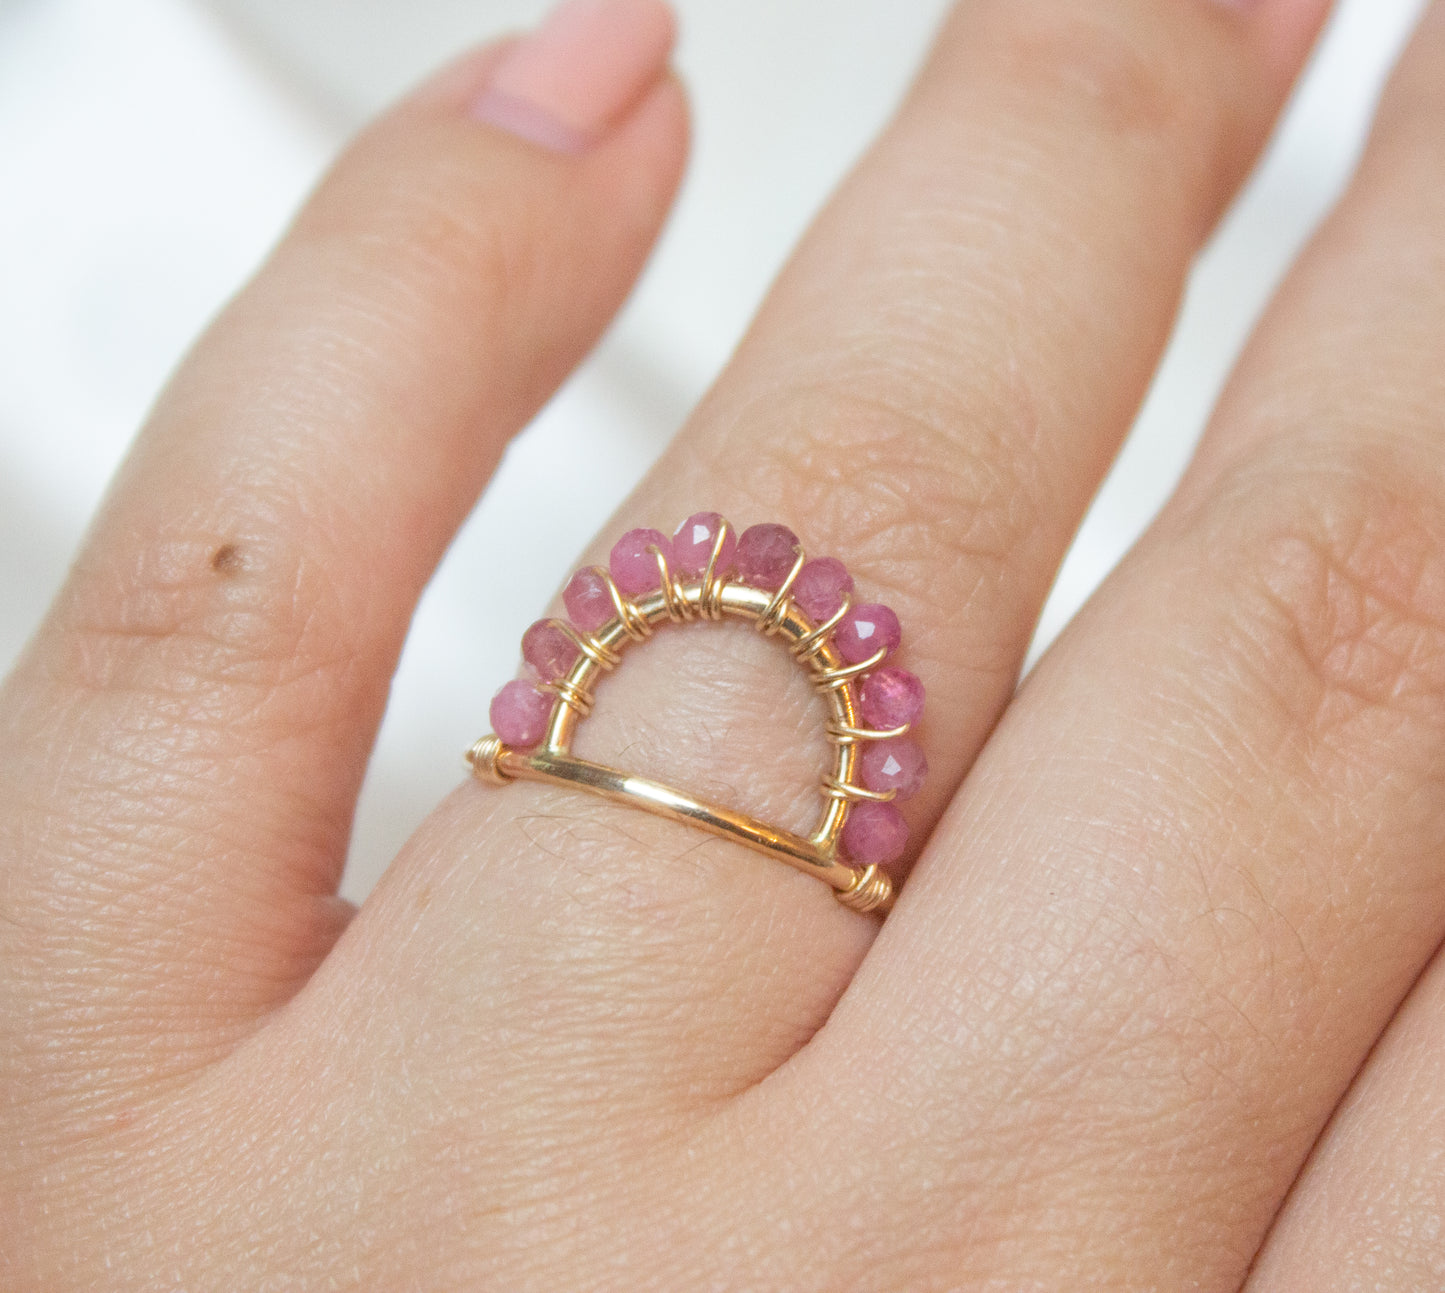 Pink Tourmaline Arch Ring